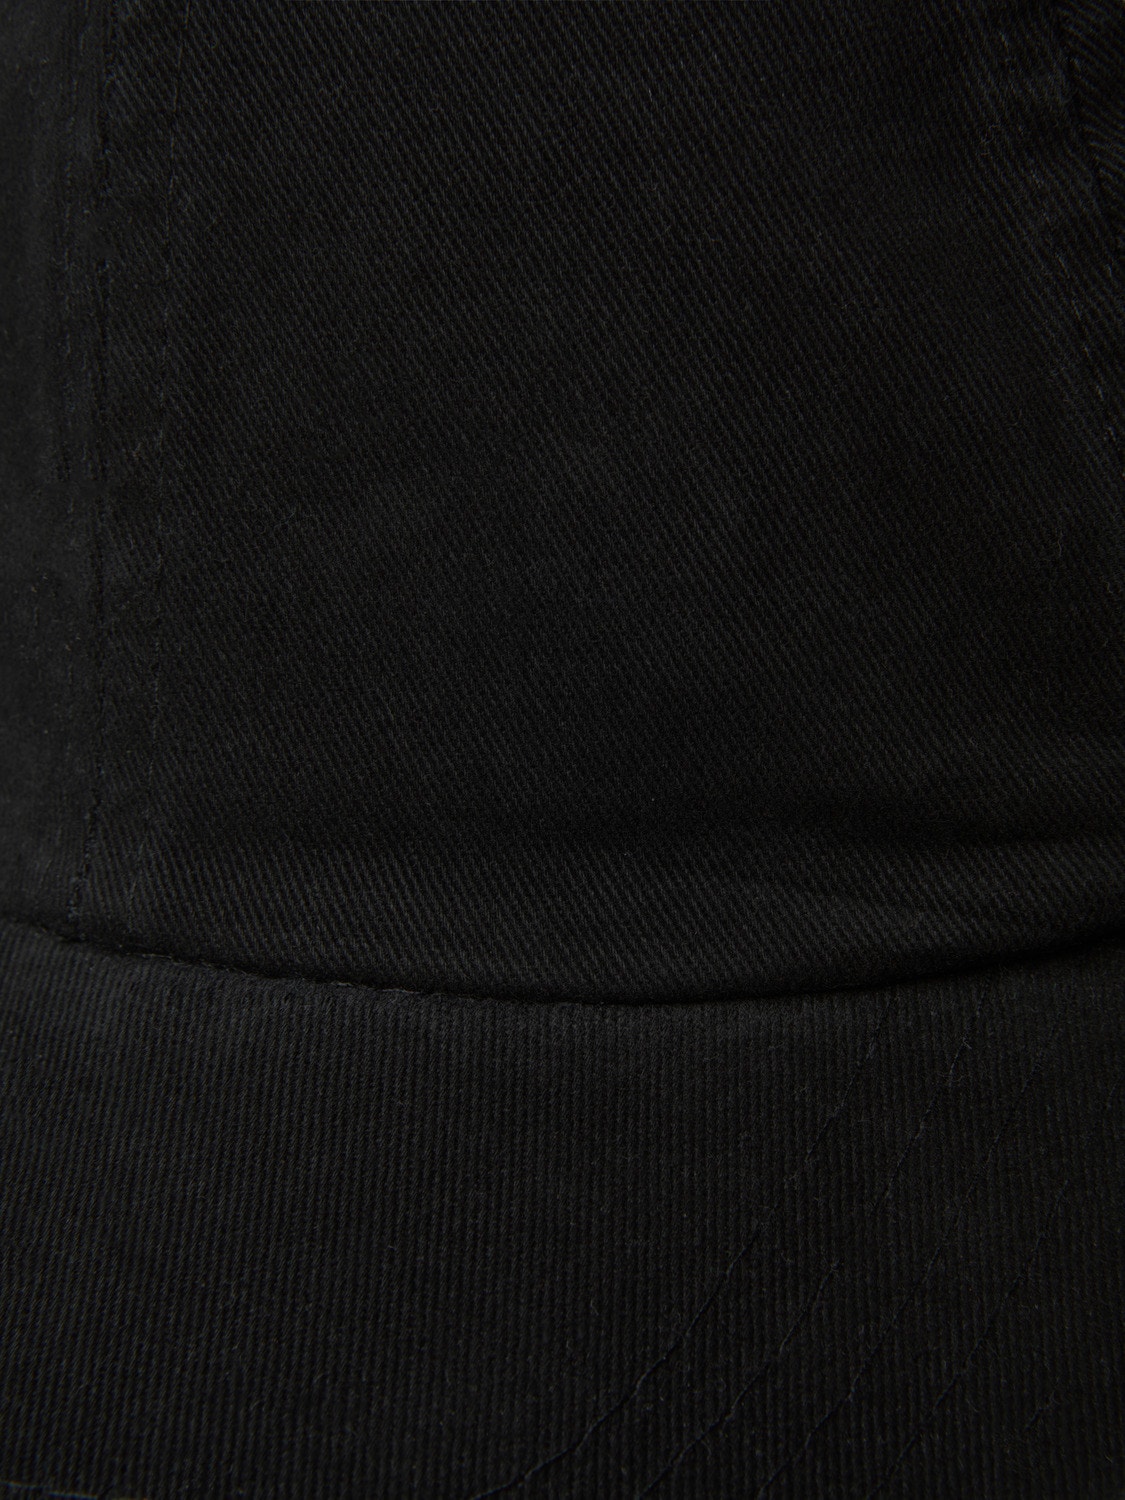 Jack & Jones Baseball cap -Black - 12193385